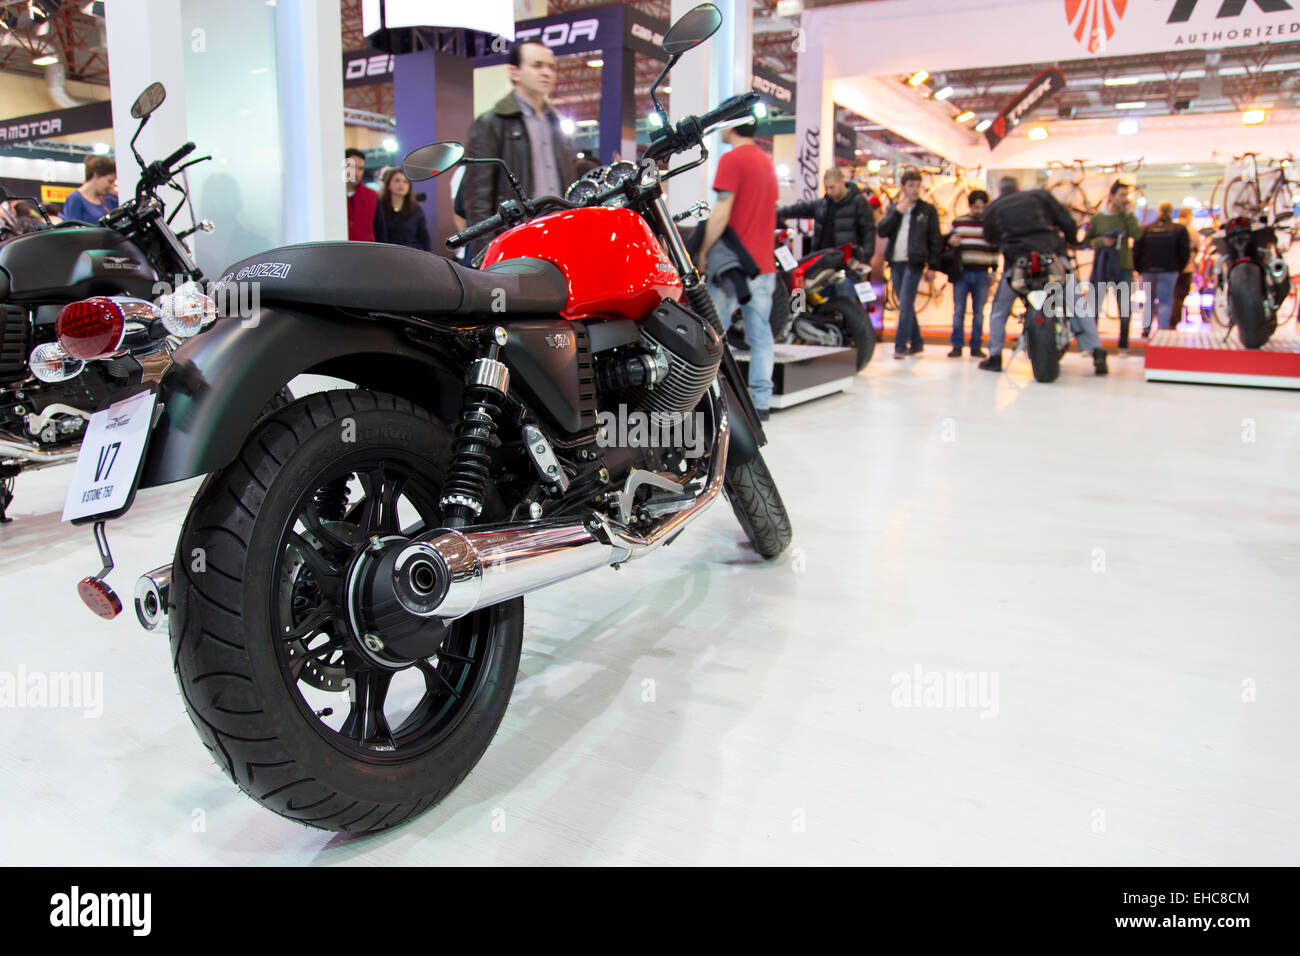 Istanbul, Turkey - February 27, 2015: Motorcycles on display at Eurasia motorbike expo 2015, CNR Expo Stock Photo